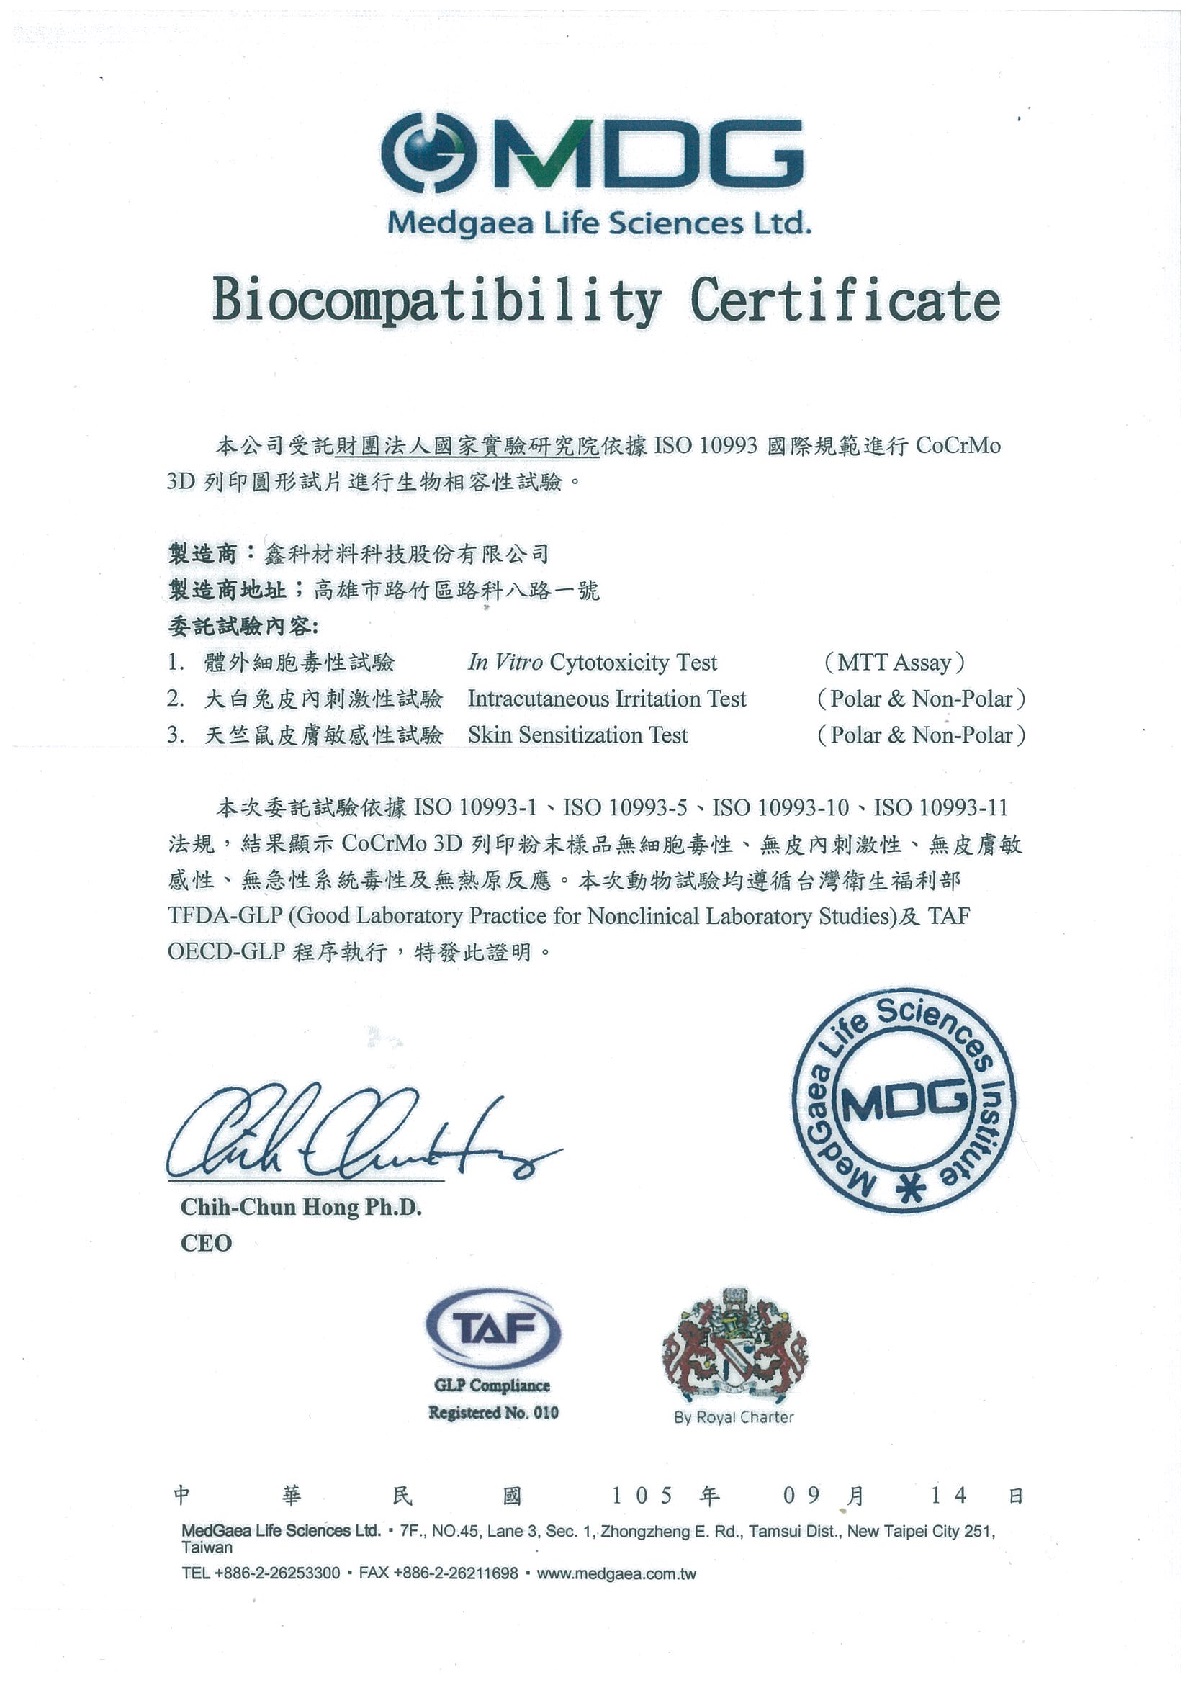 Biocompatibility Certificate 2